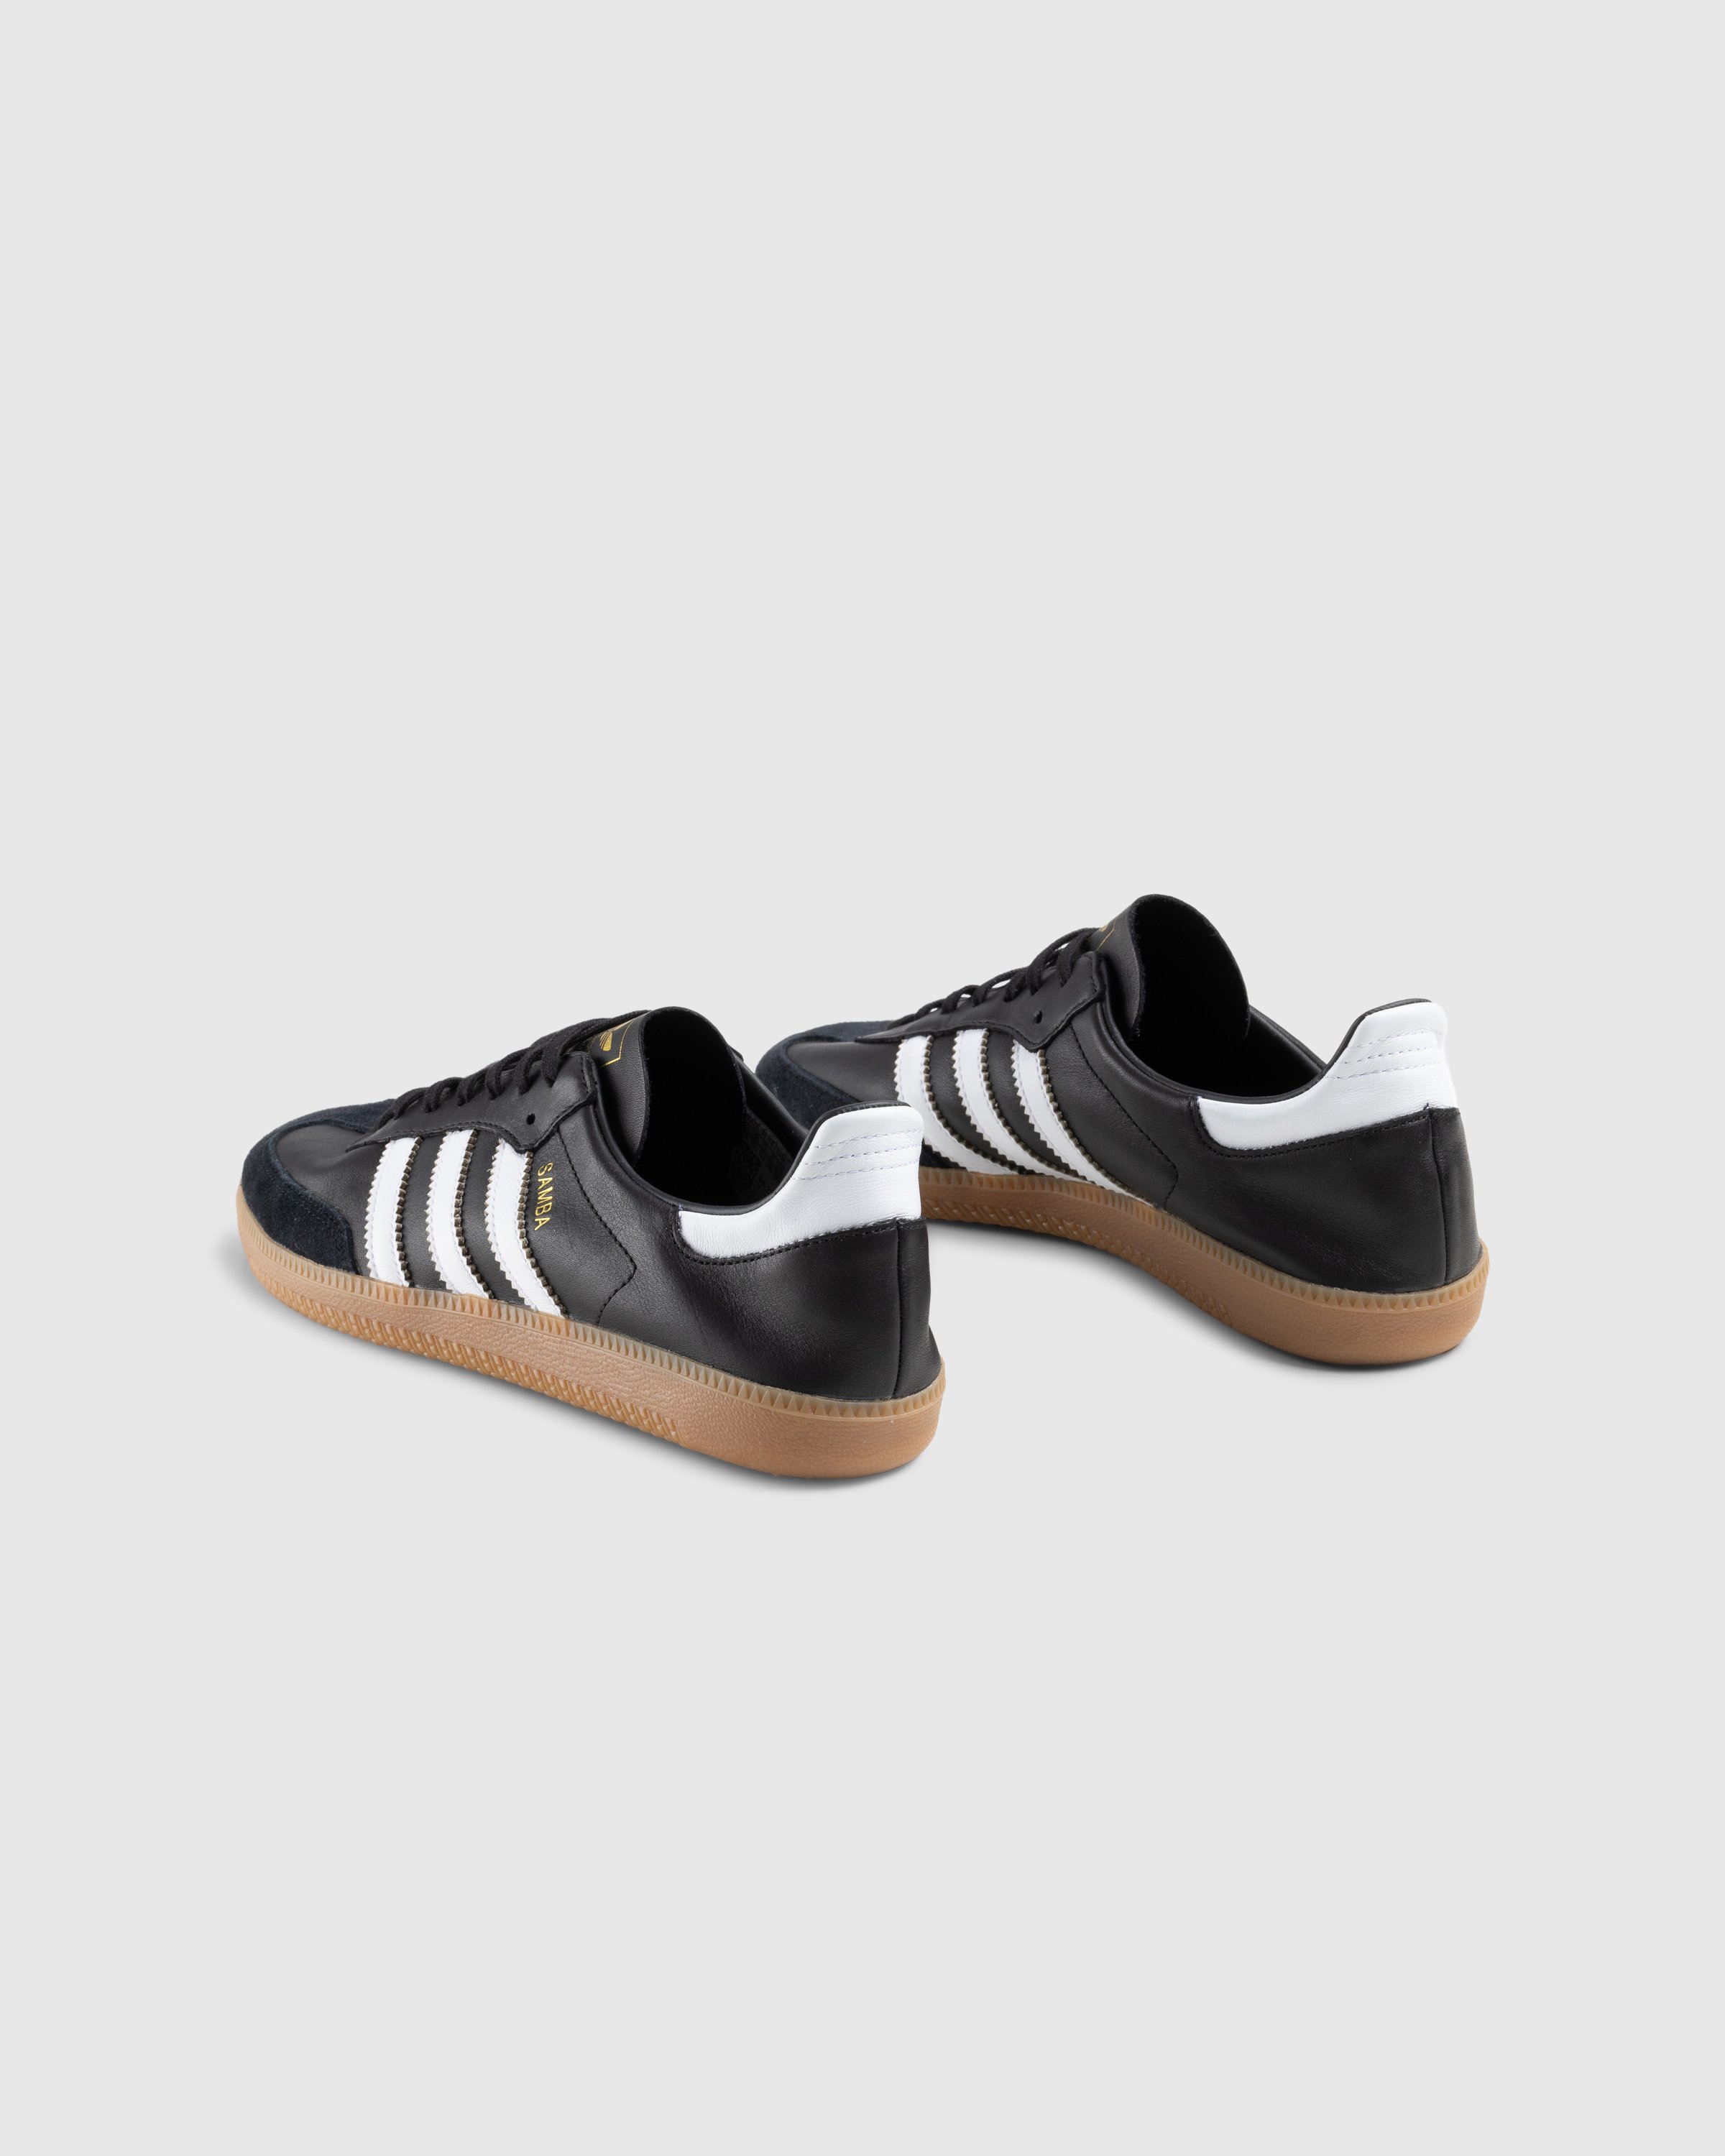 Adidas - Samba Decon Black - Footwear - Black - Image 4